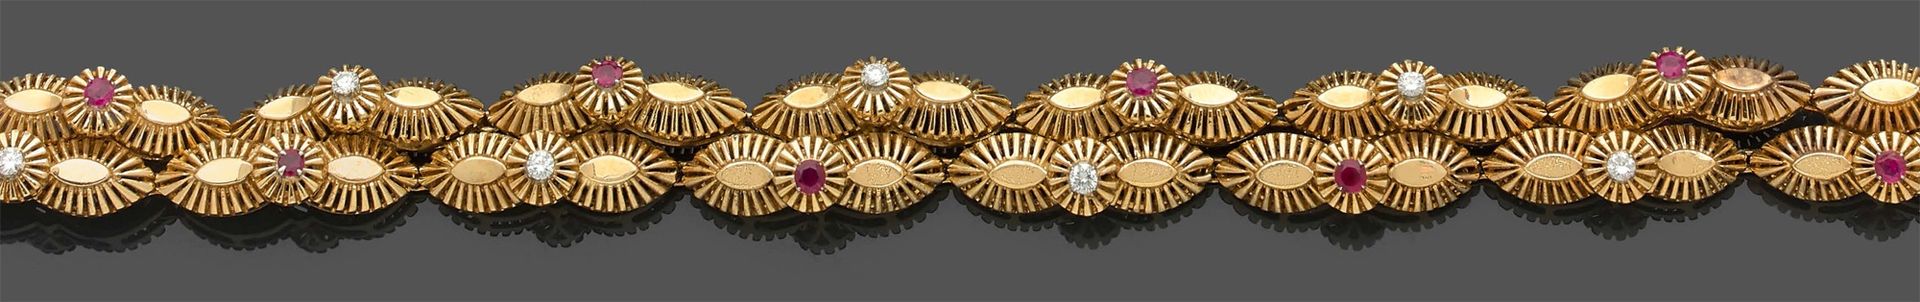 Null 黄金（750‰）衔接、圆顶、部分玑镂、放射状图案的BRACELET "肚脐 "上交替镶嵌着红宝石和明亮型切割钻石。
长度：20厘米。宽度：1.3厘米 &hellip;